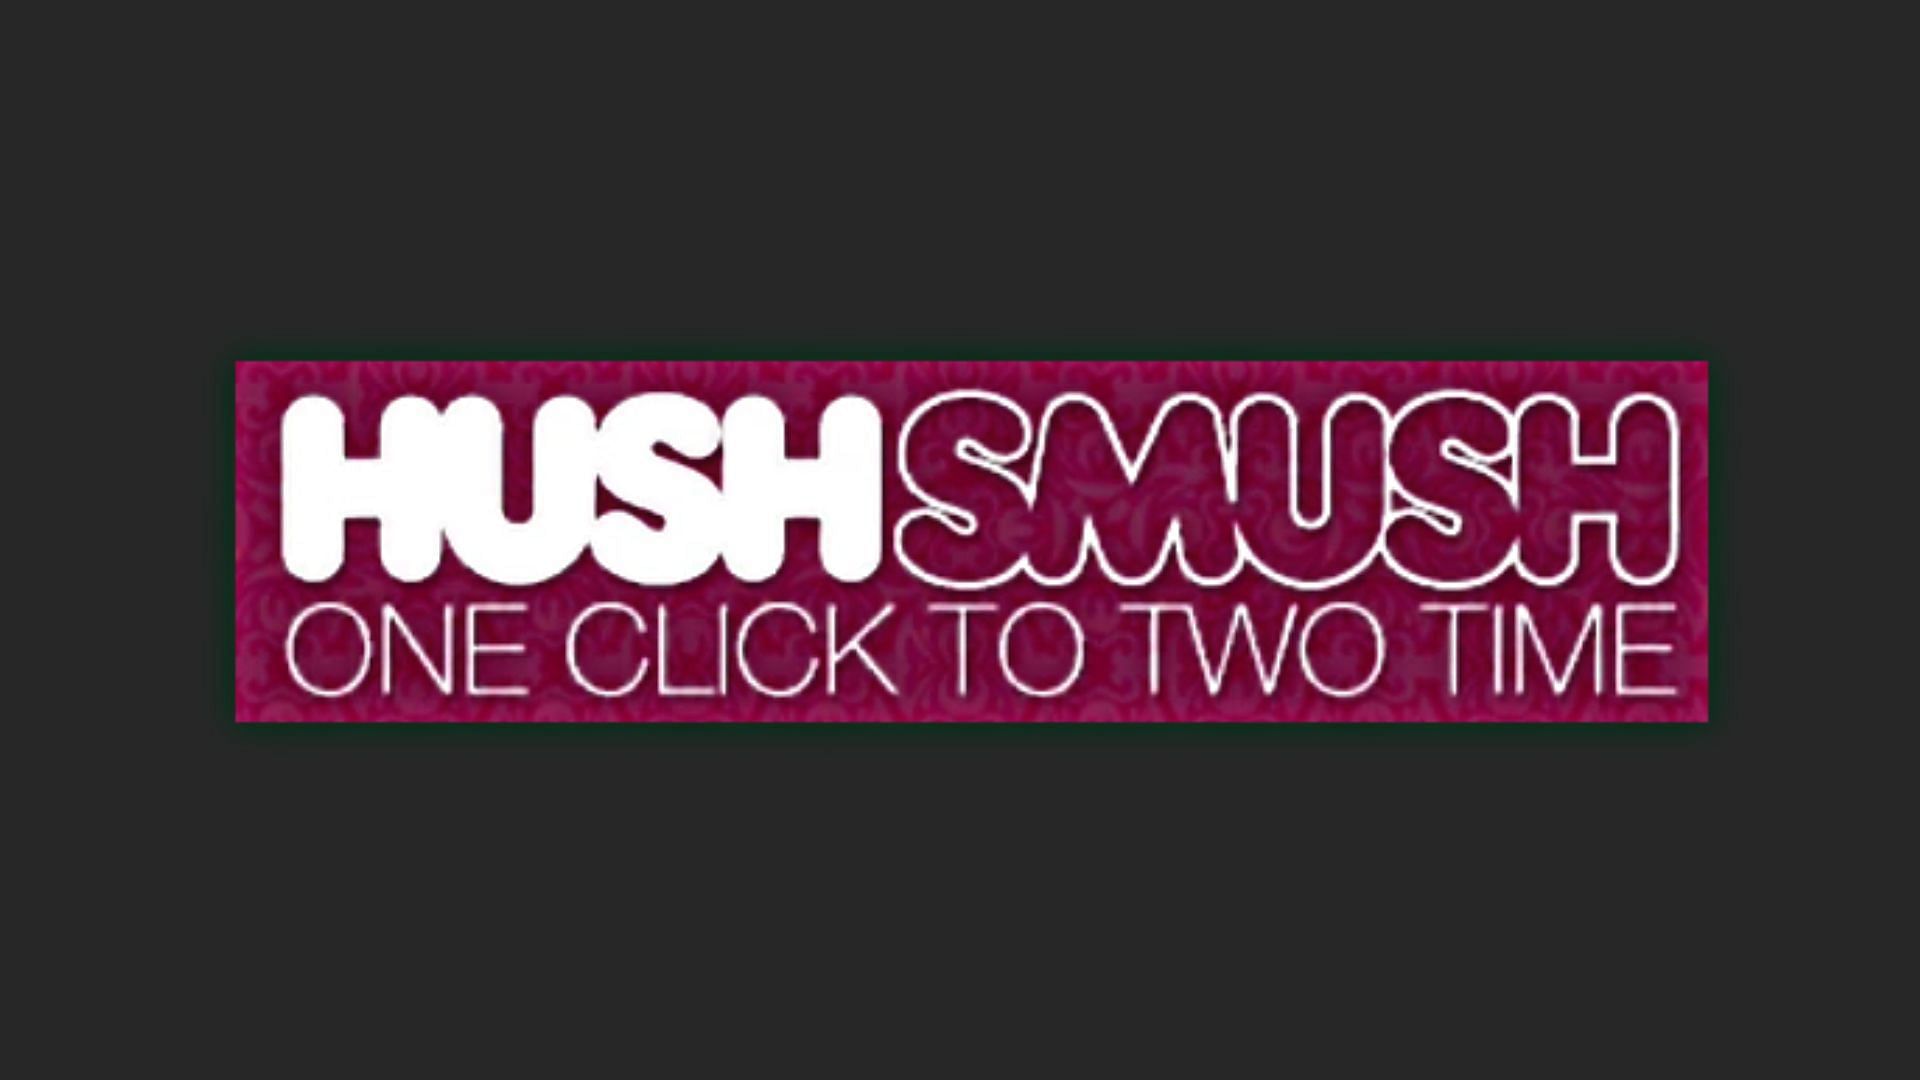 Gta 5 сайт знакомств hushsmush com фото 12